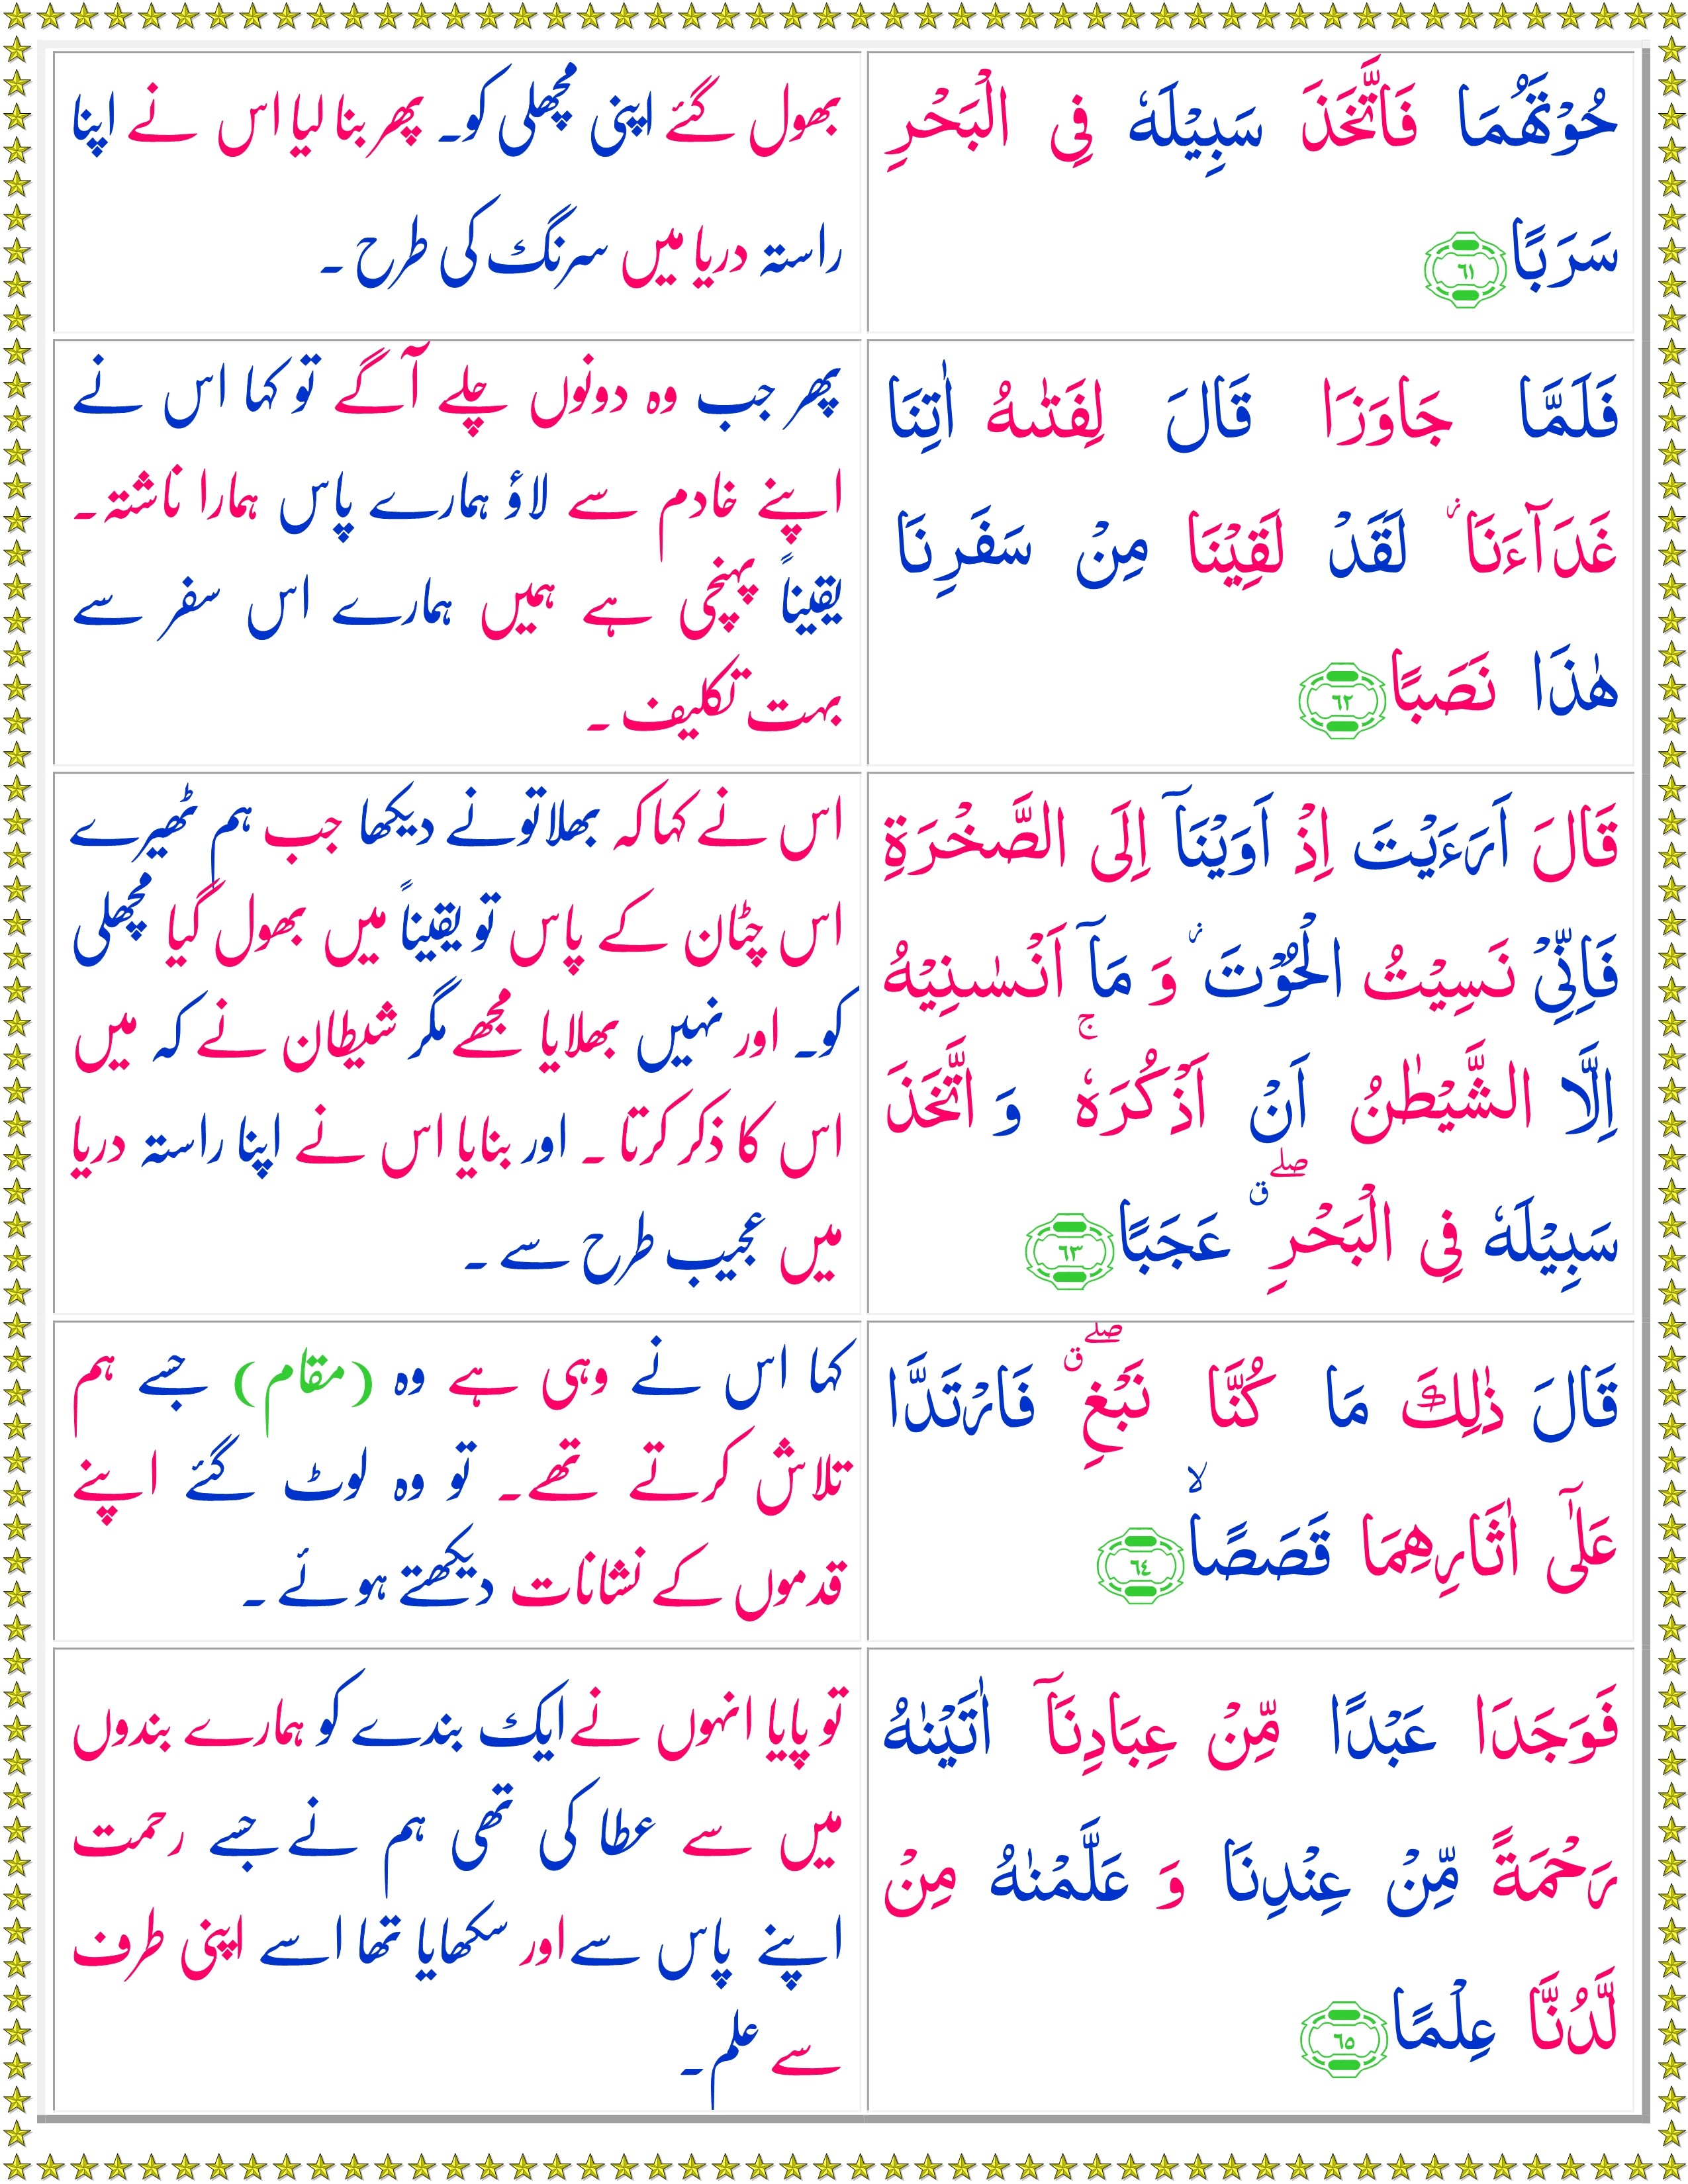 Surah Kahf - Read Or Listen It Online - Page 2 of 3 - Quran o Sunnat